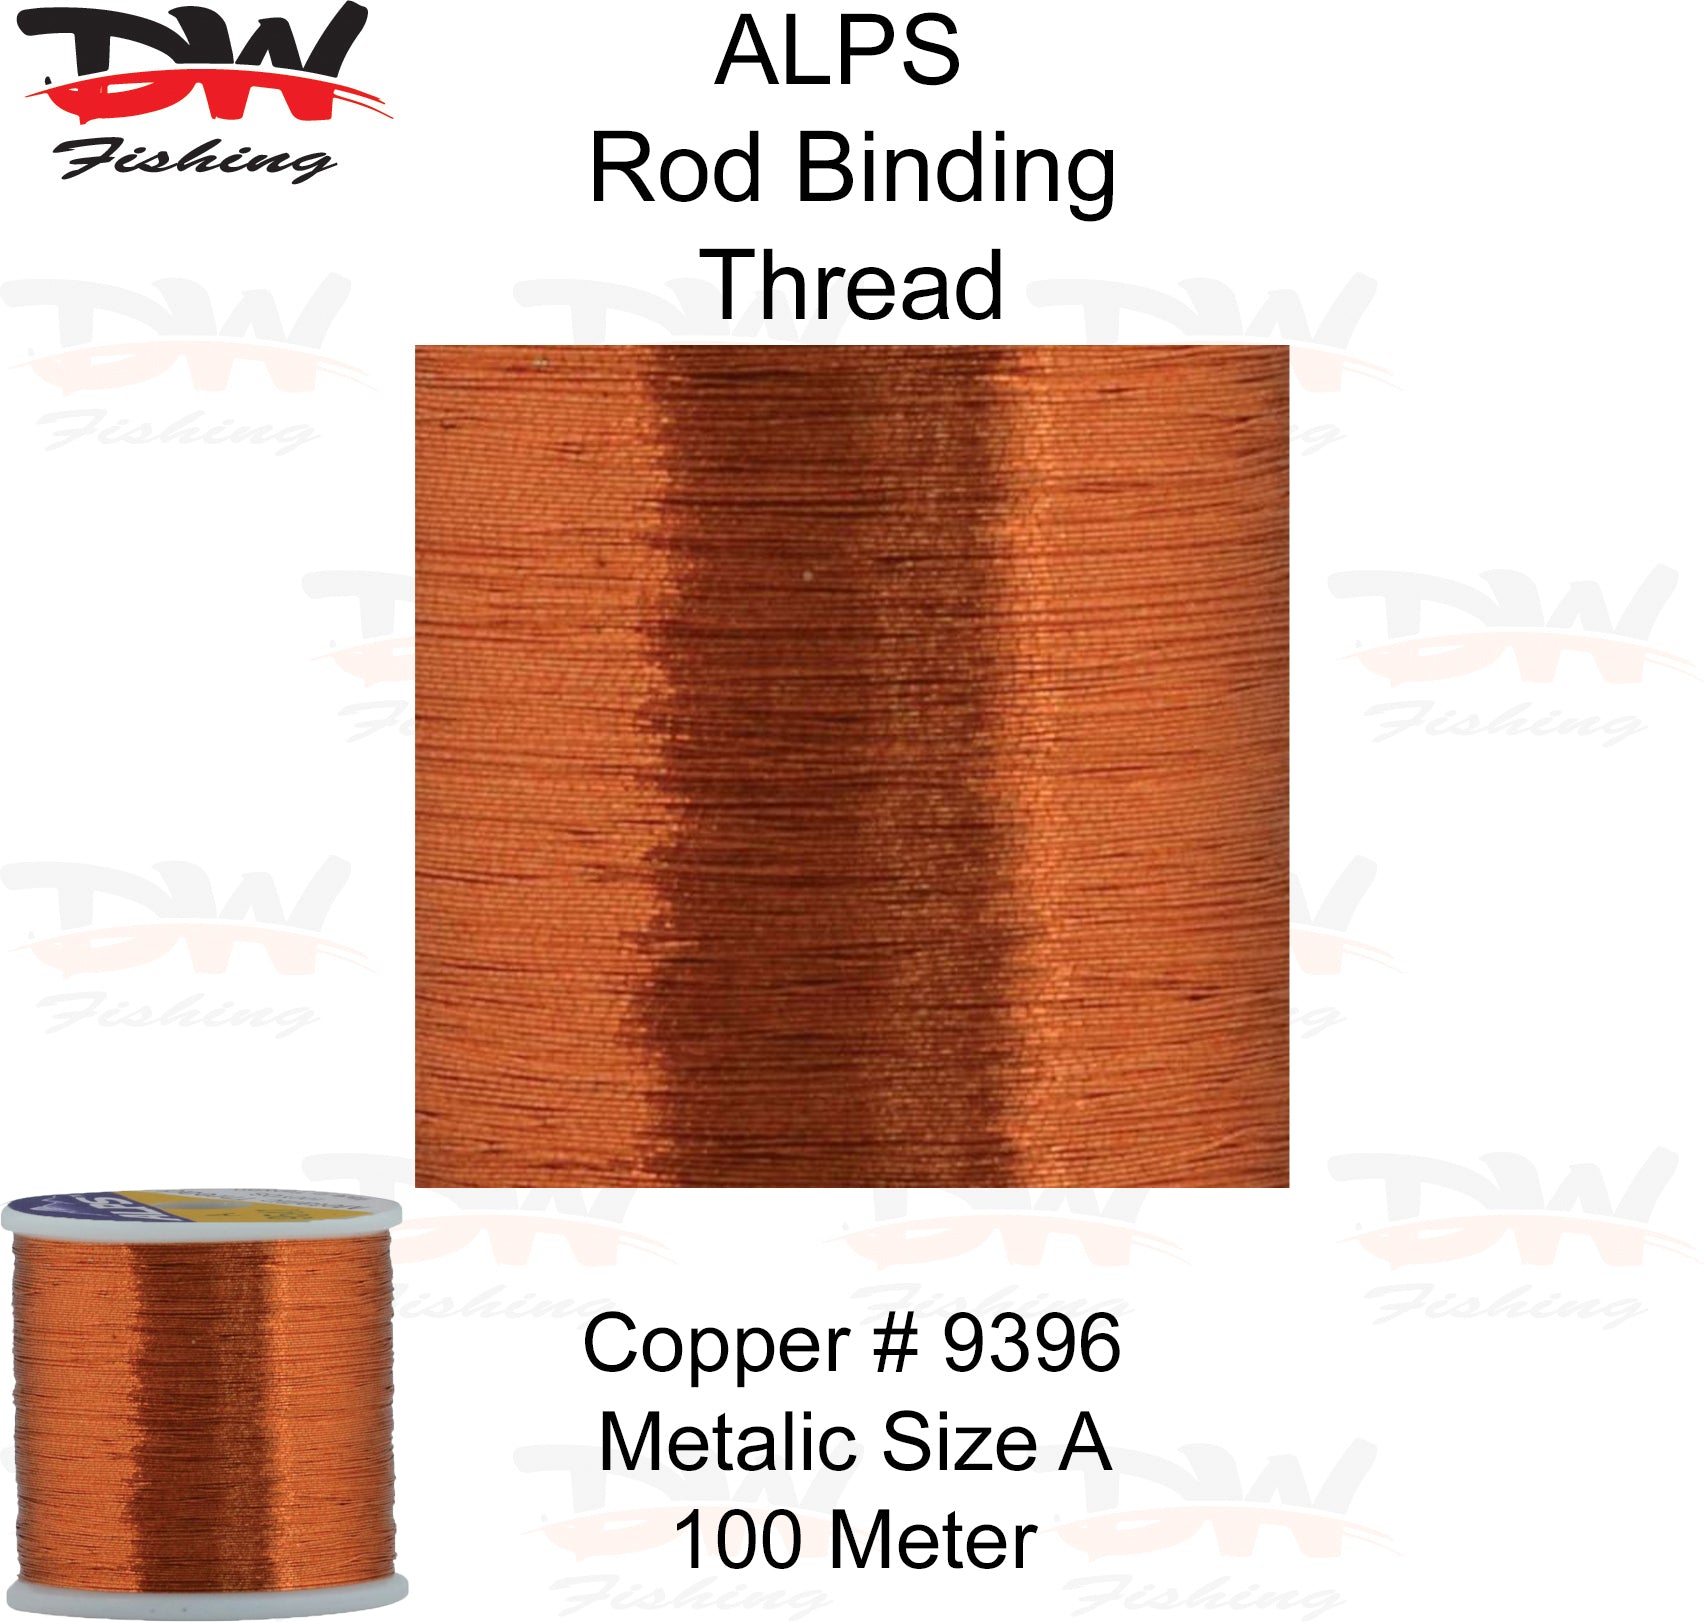 ALPS metalic rod binding thread copper